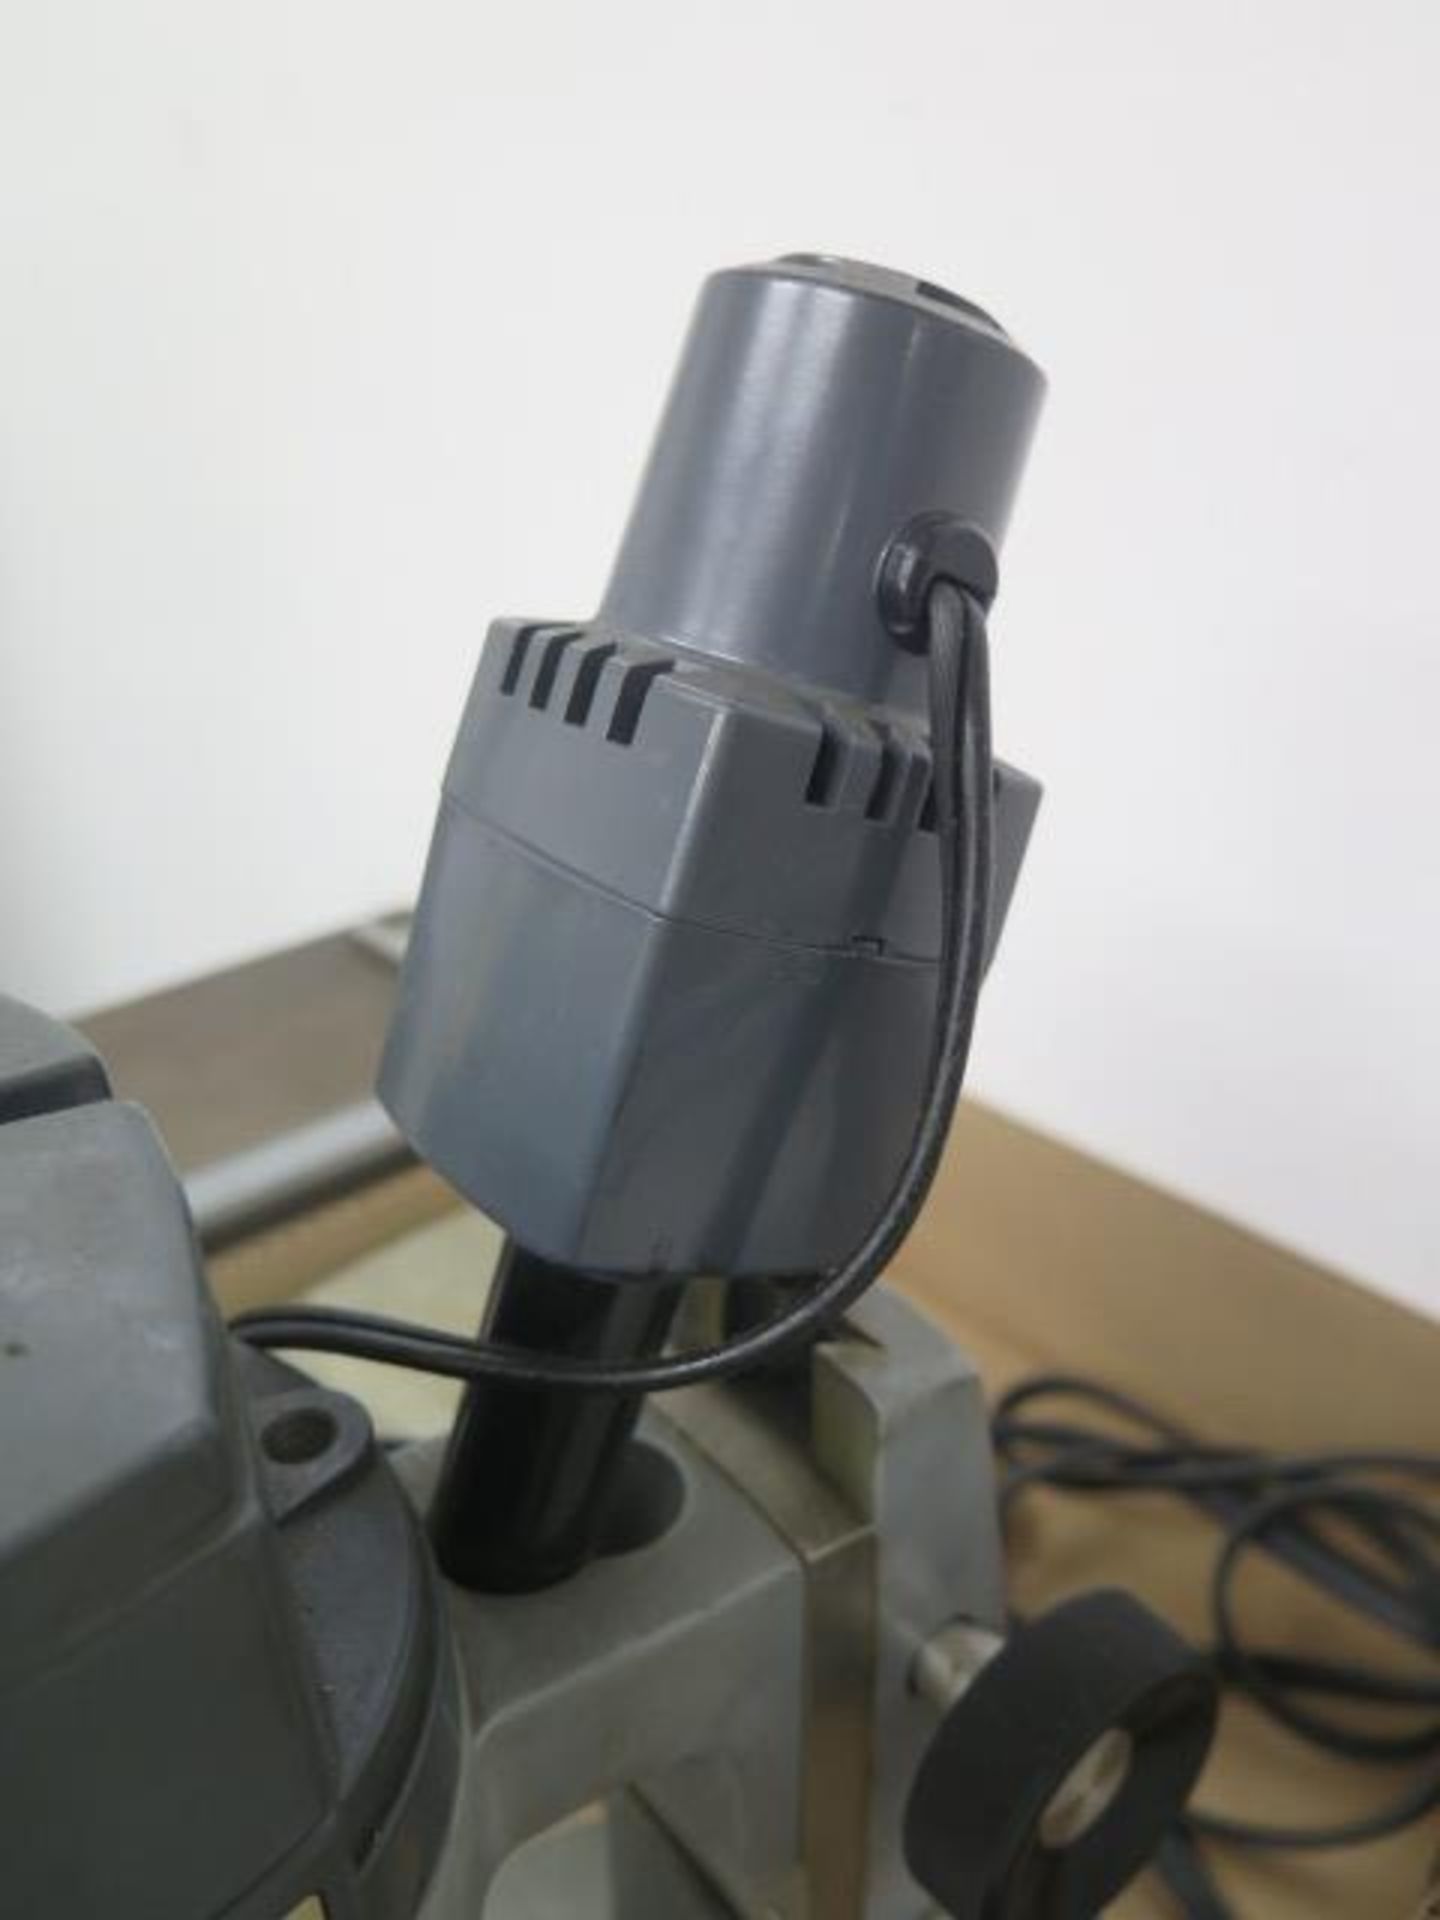 McBain Stewreo Microscope w/ Light Source (SOLD AS-IS - NO WARRANTY) - Image 6 of 6